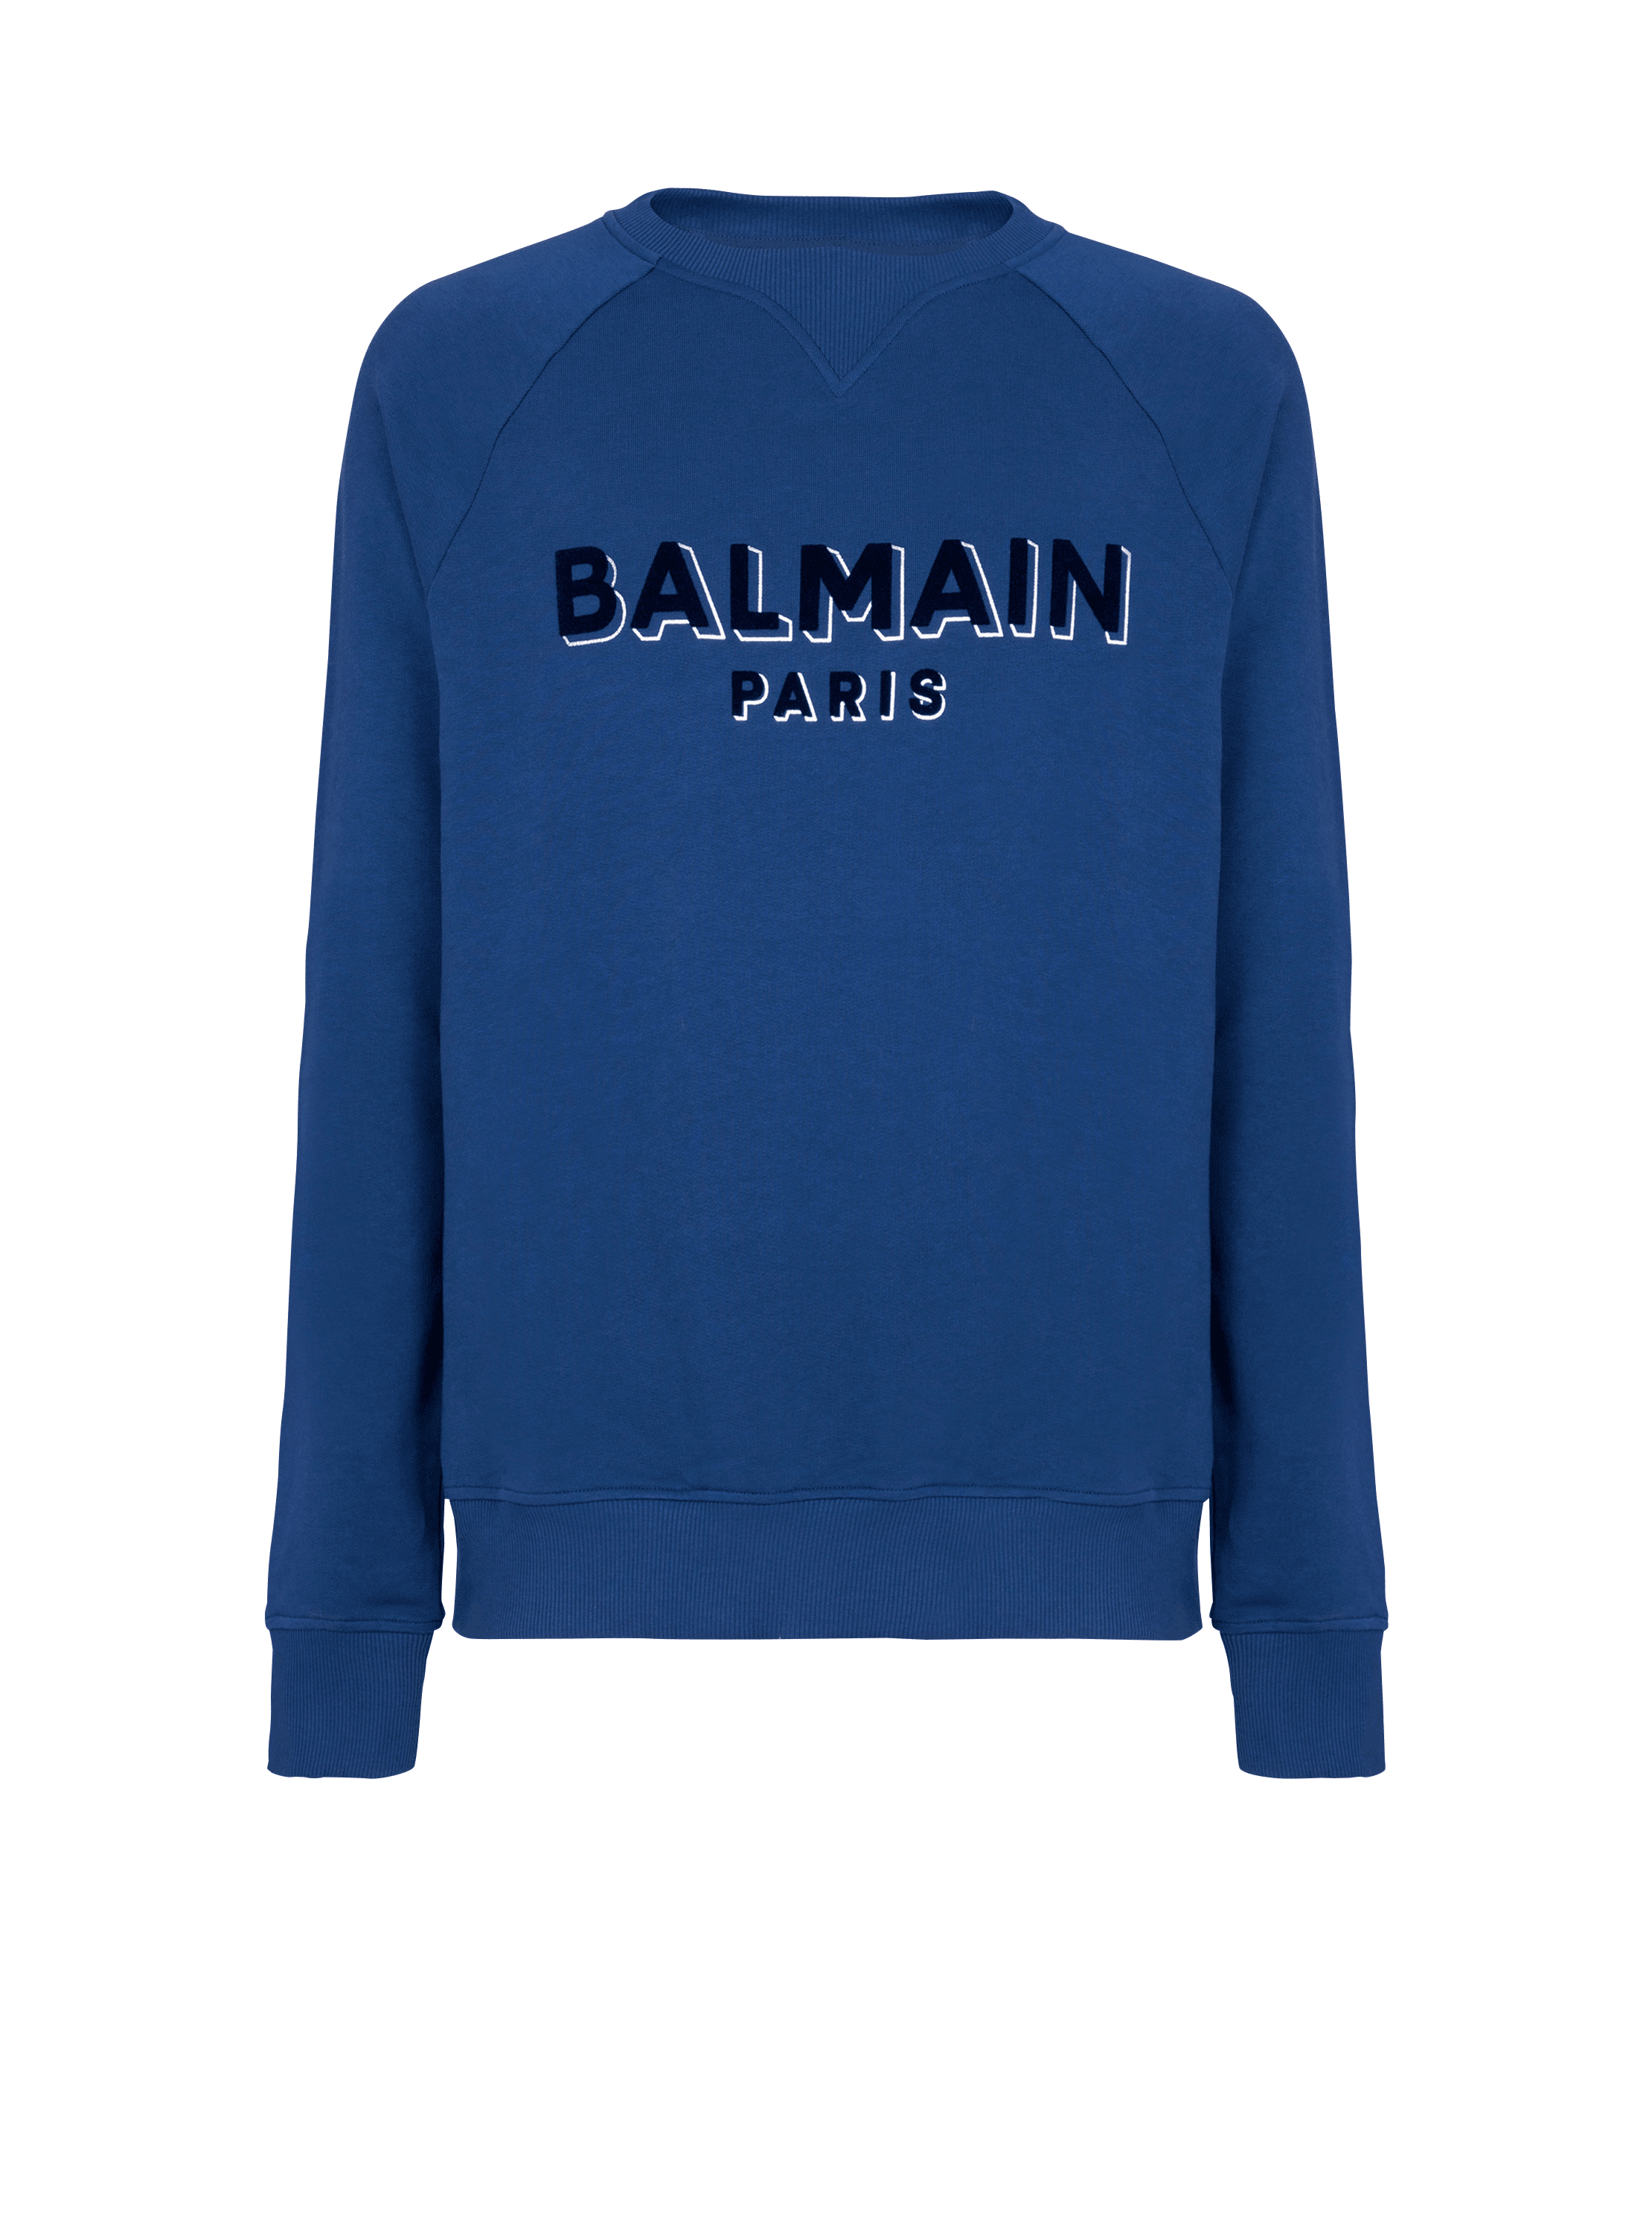 Balmain Sweatshirt mit beflocktem Metallic-Print, marineblau, hi-res